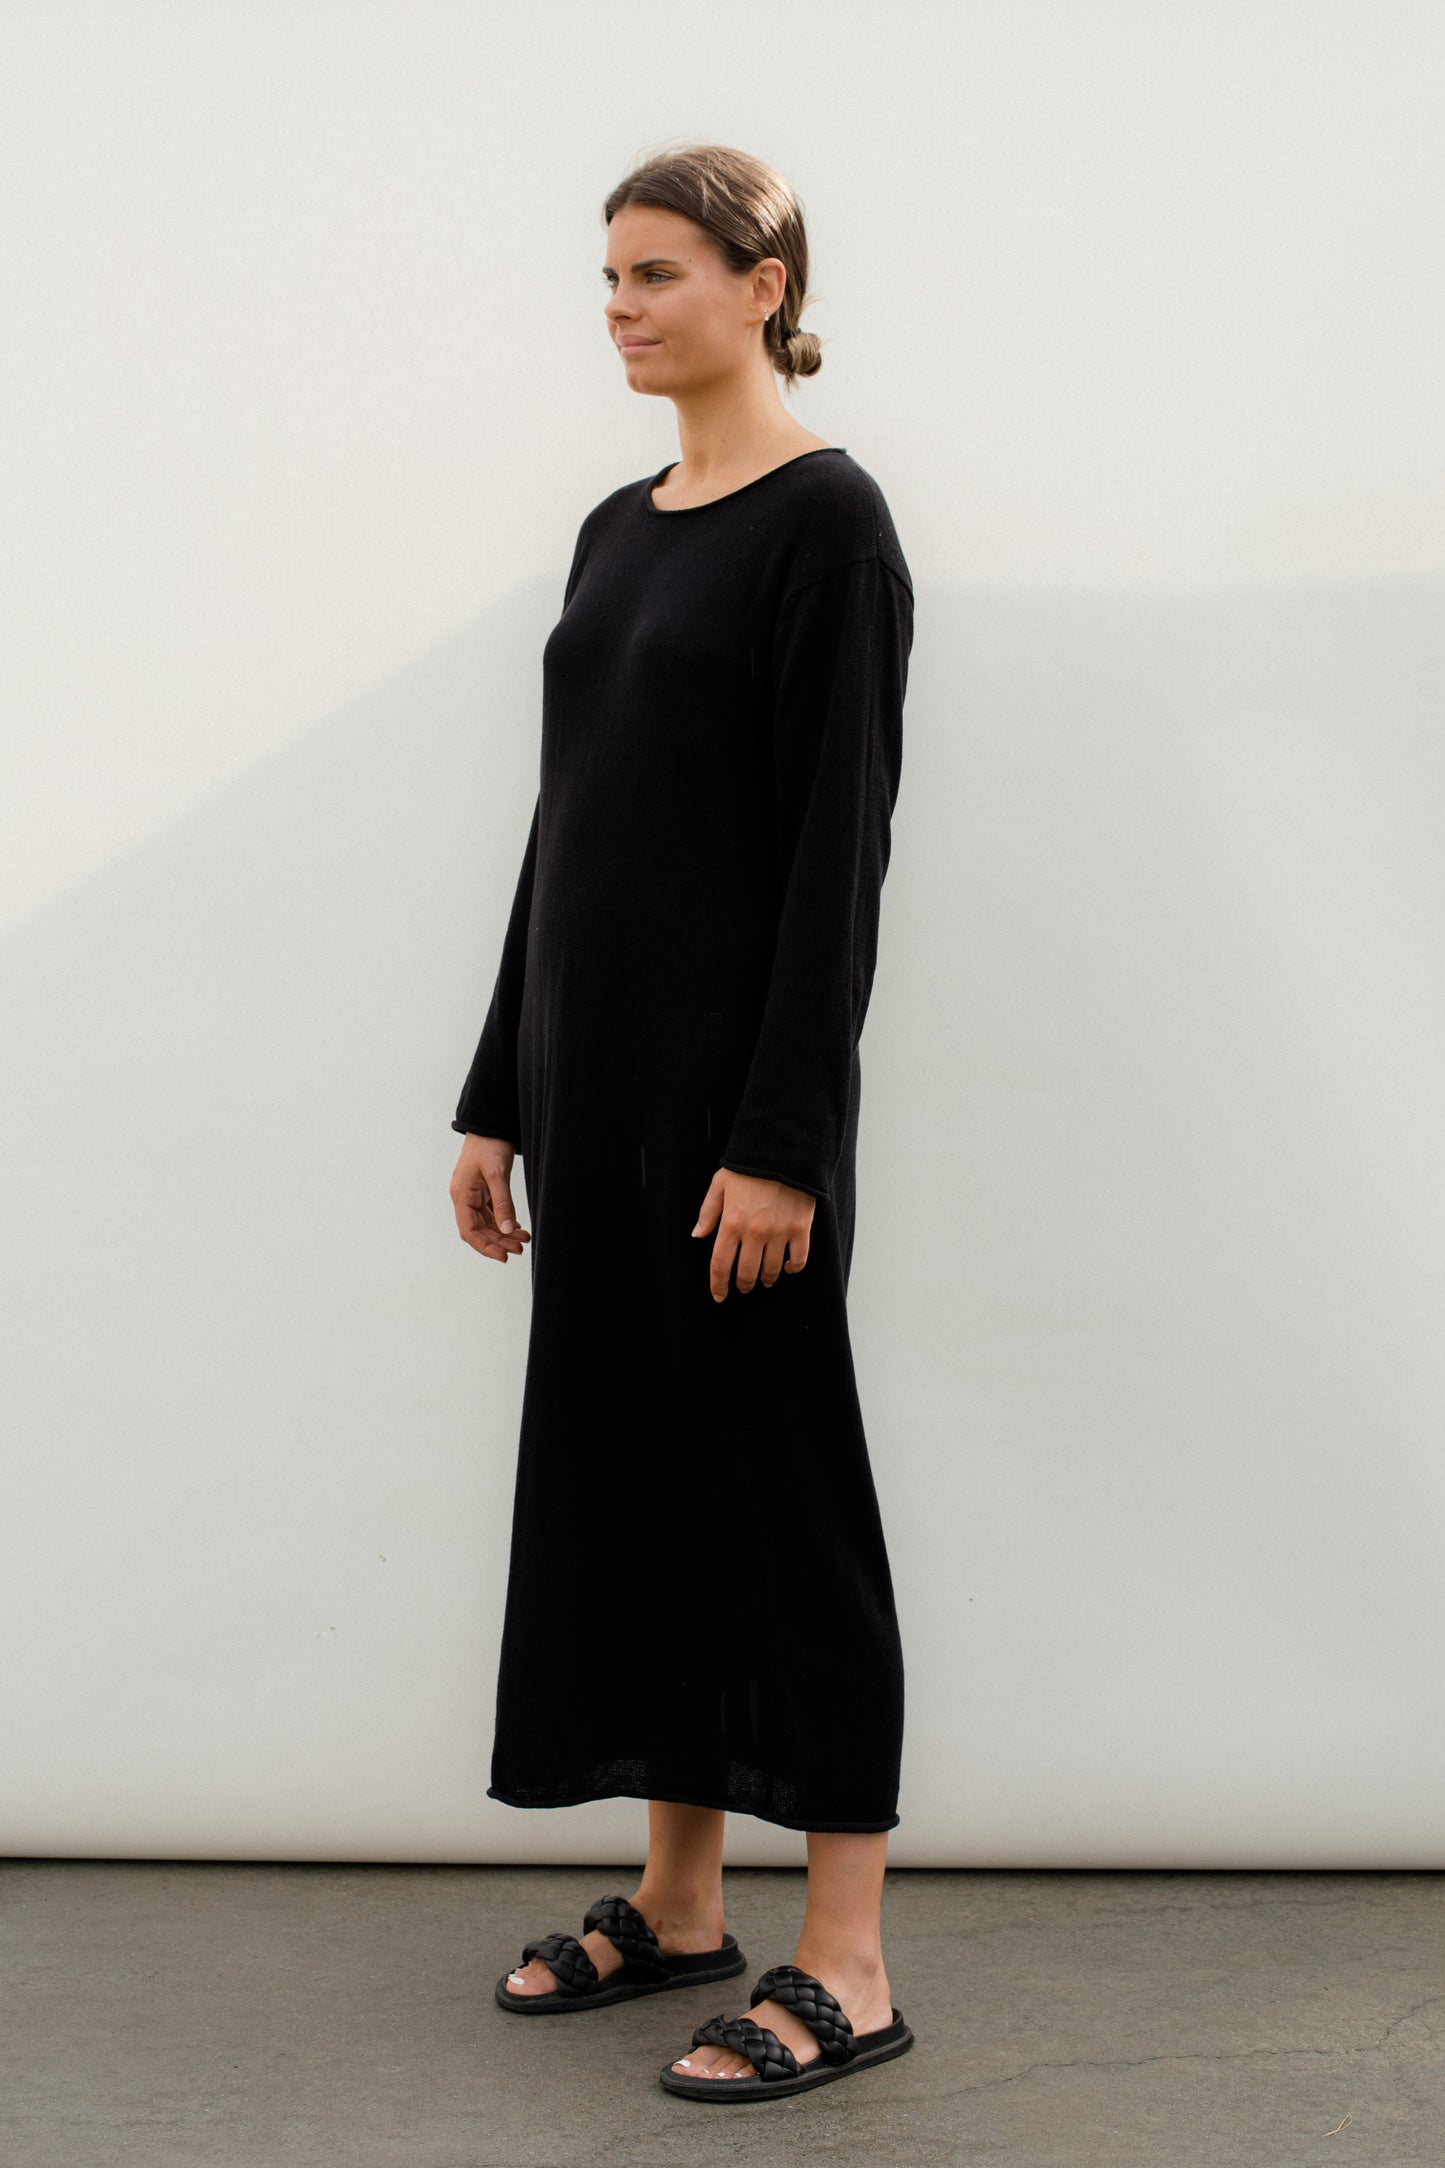 BEIGED // Jane Knit Dress BLACK